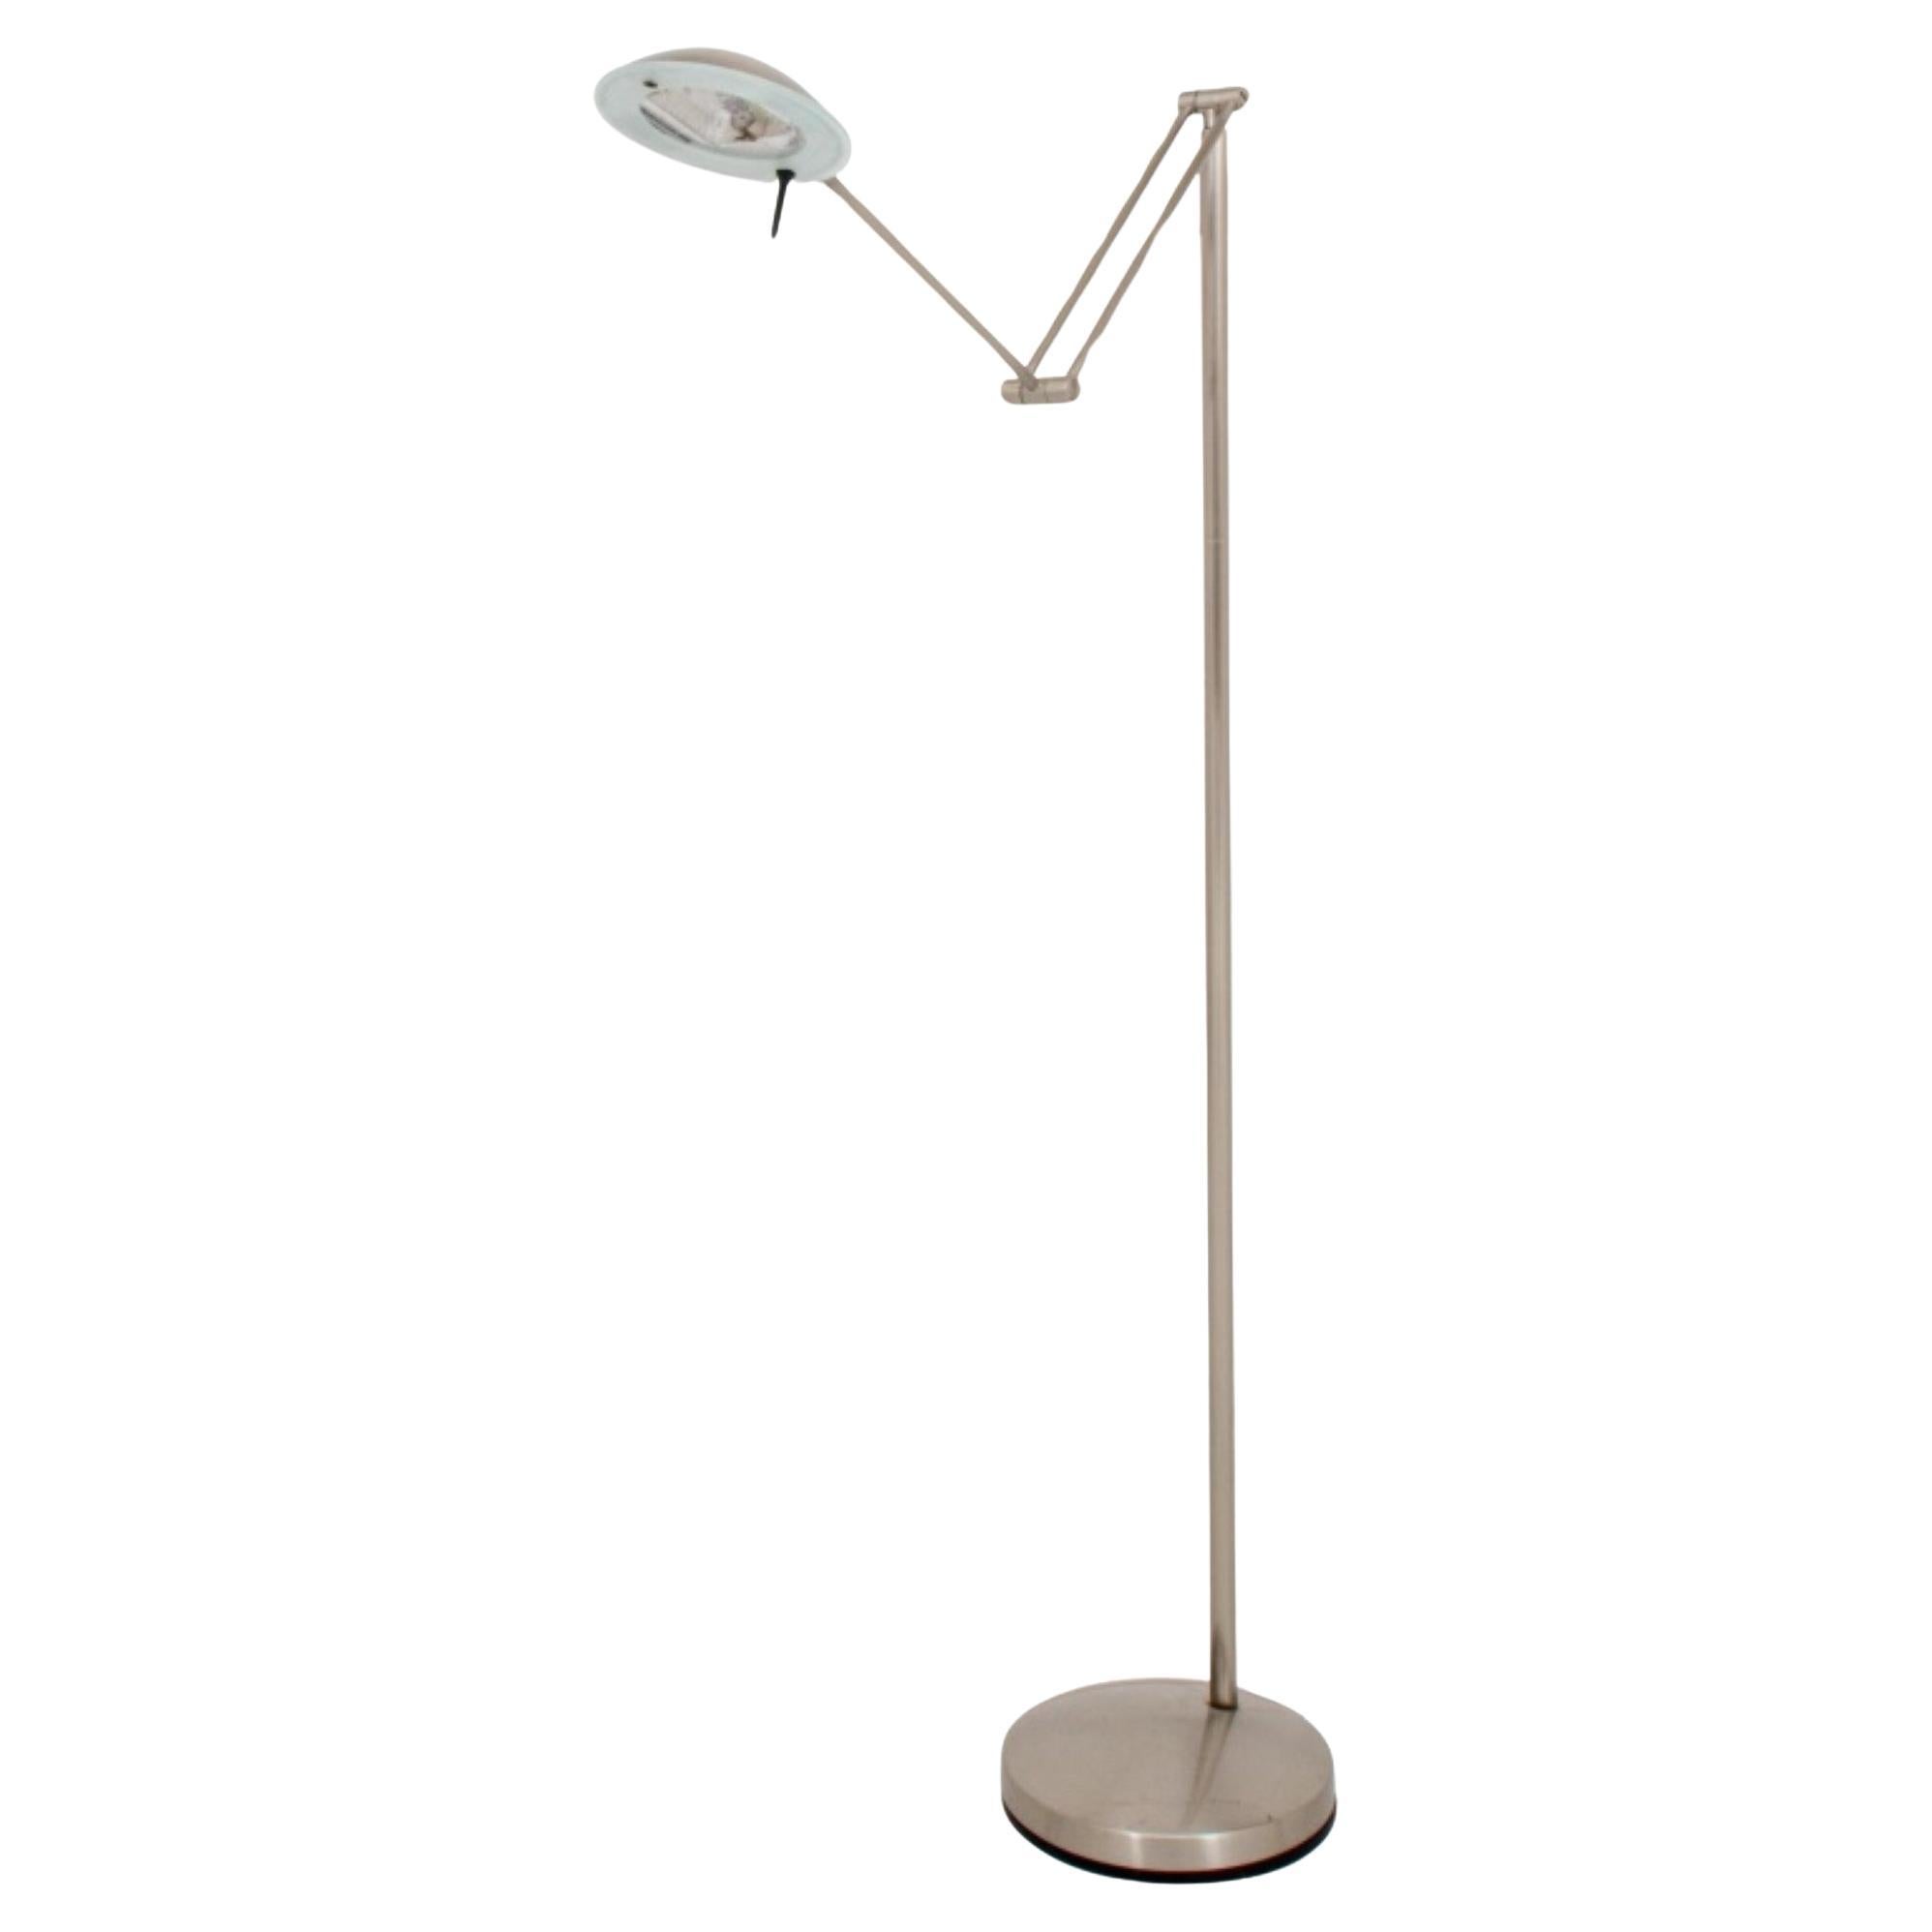 Leonardo Marelli for Estiluz Reading Floor Lamp For Sale